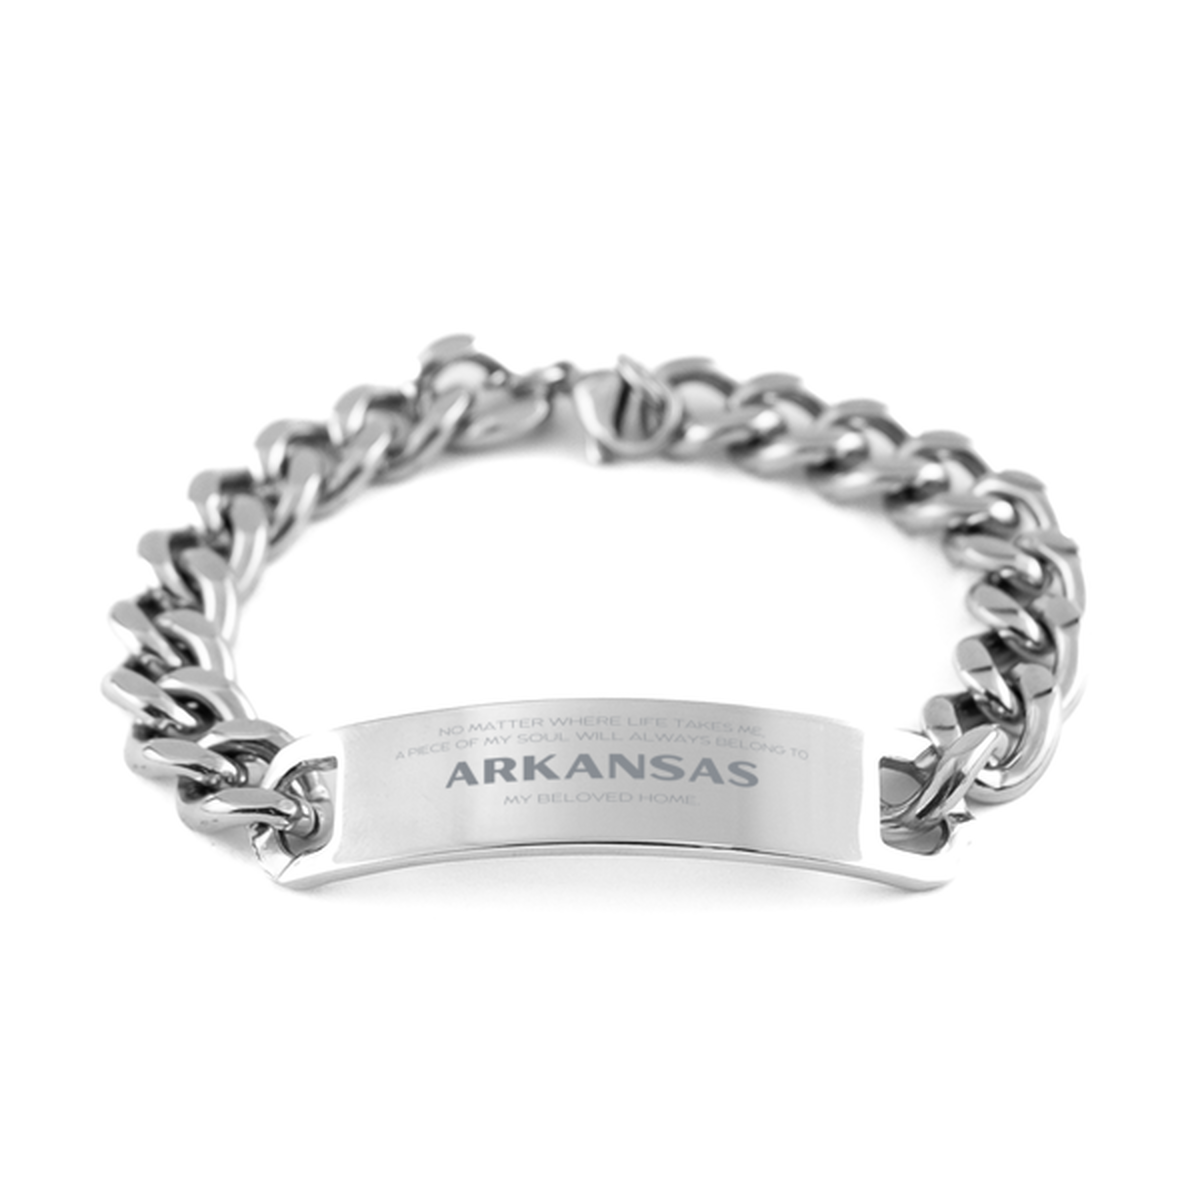 Love Arkansas State Gifts, My soul will always belong to Arkansas, Proud Cuban Chain Stainless Steel Bracelet, Birthday Unique Gifts For Arkansas Men, Women, Friends